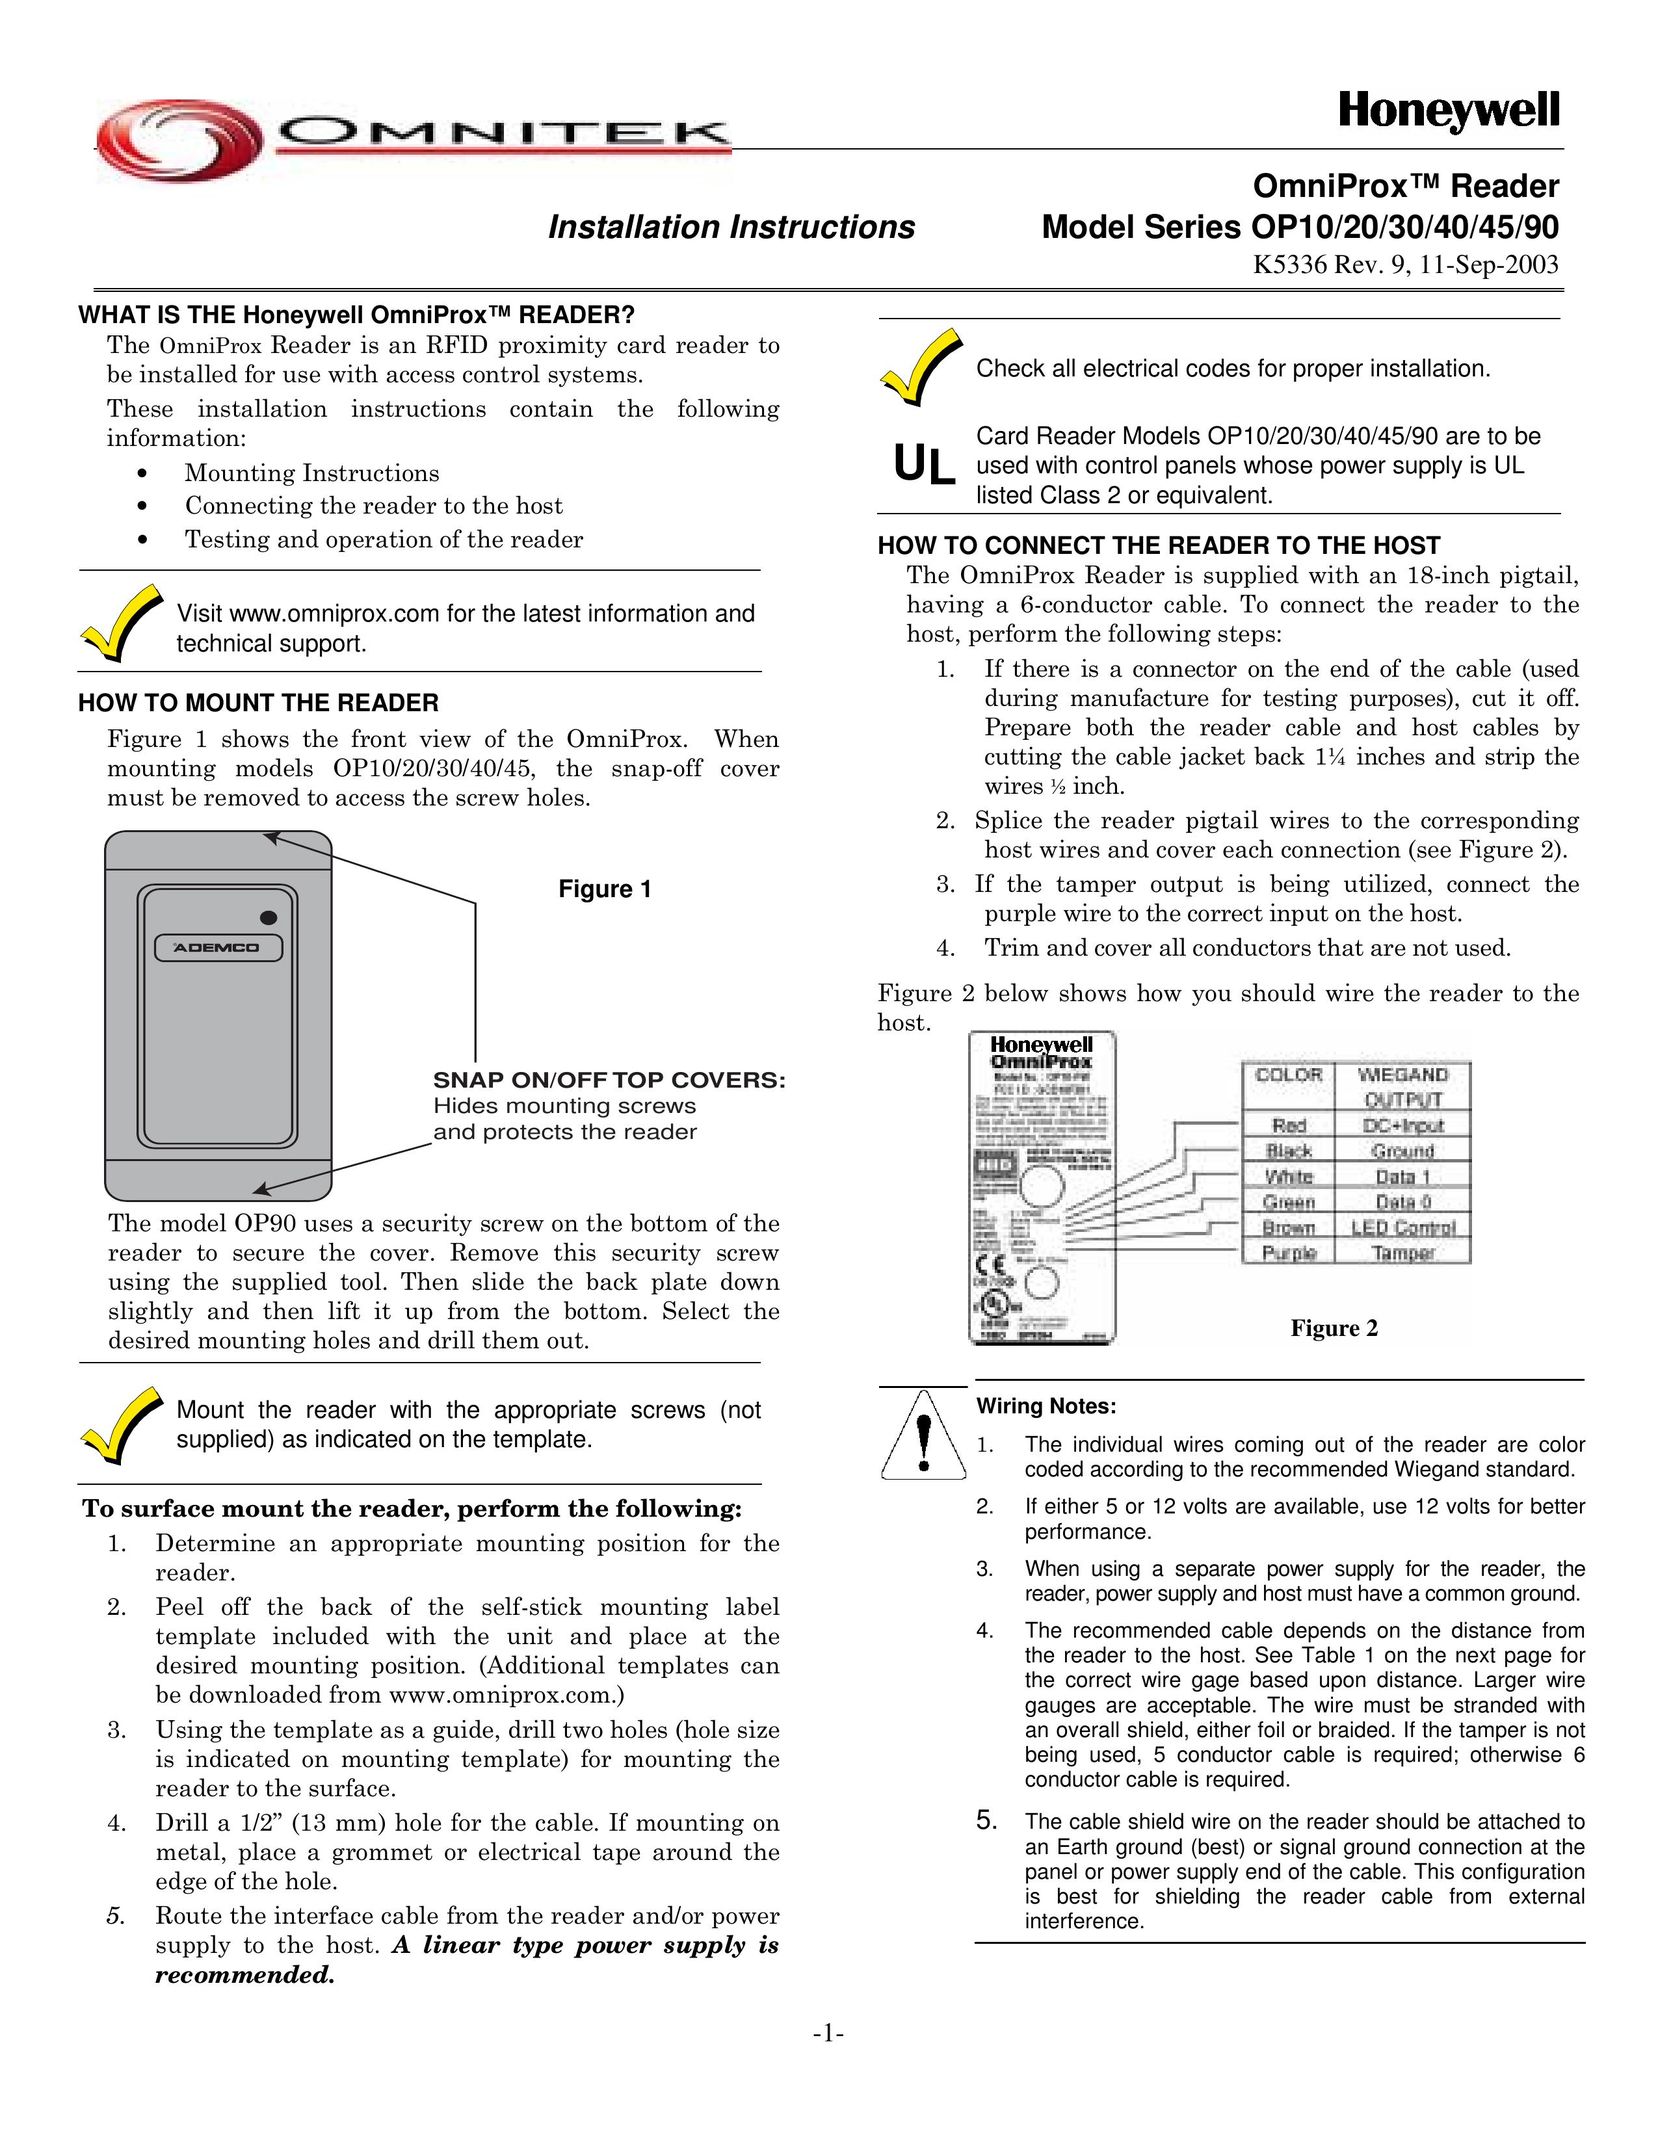 OmniTek OP45 Barcode Reader User Manual